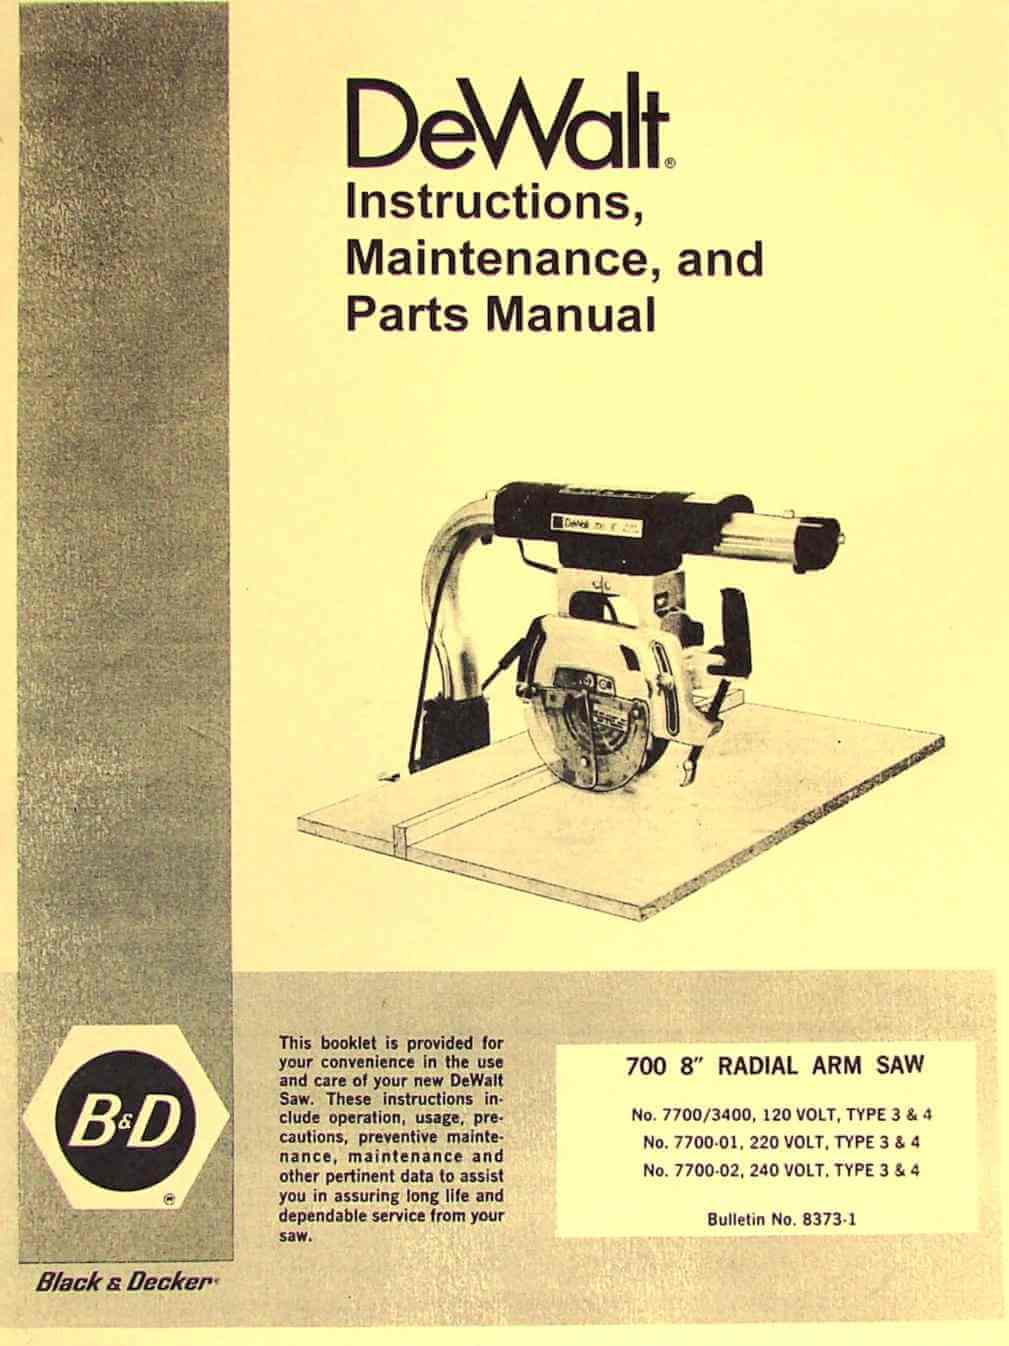 DEWALT PowerShop 7730 10" Radial Arm Saw Instruction & Parts Manual 0256 